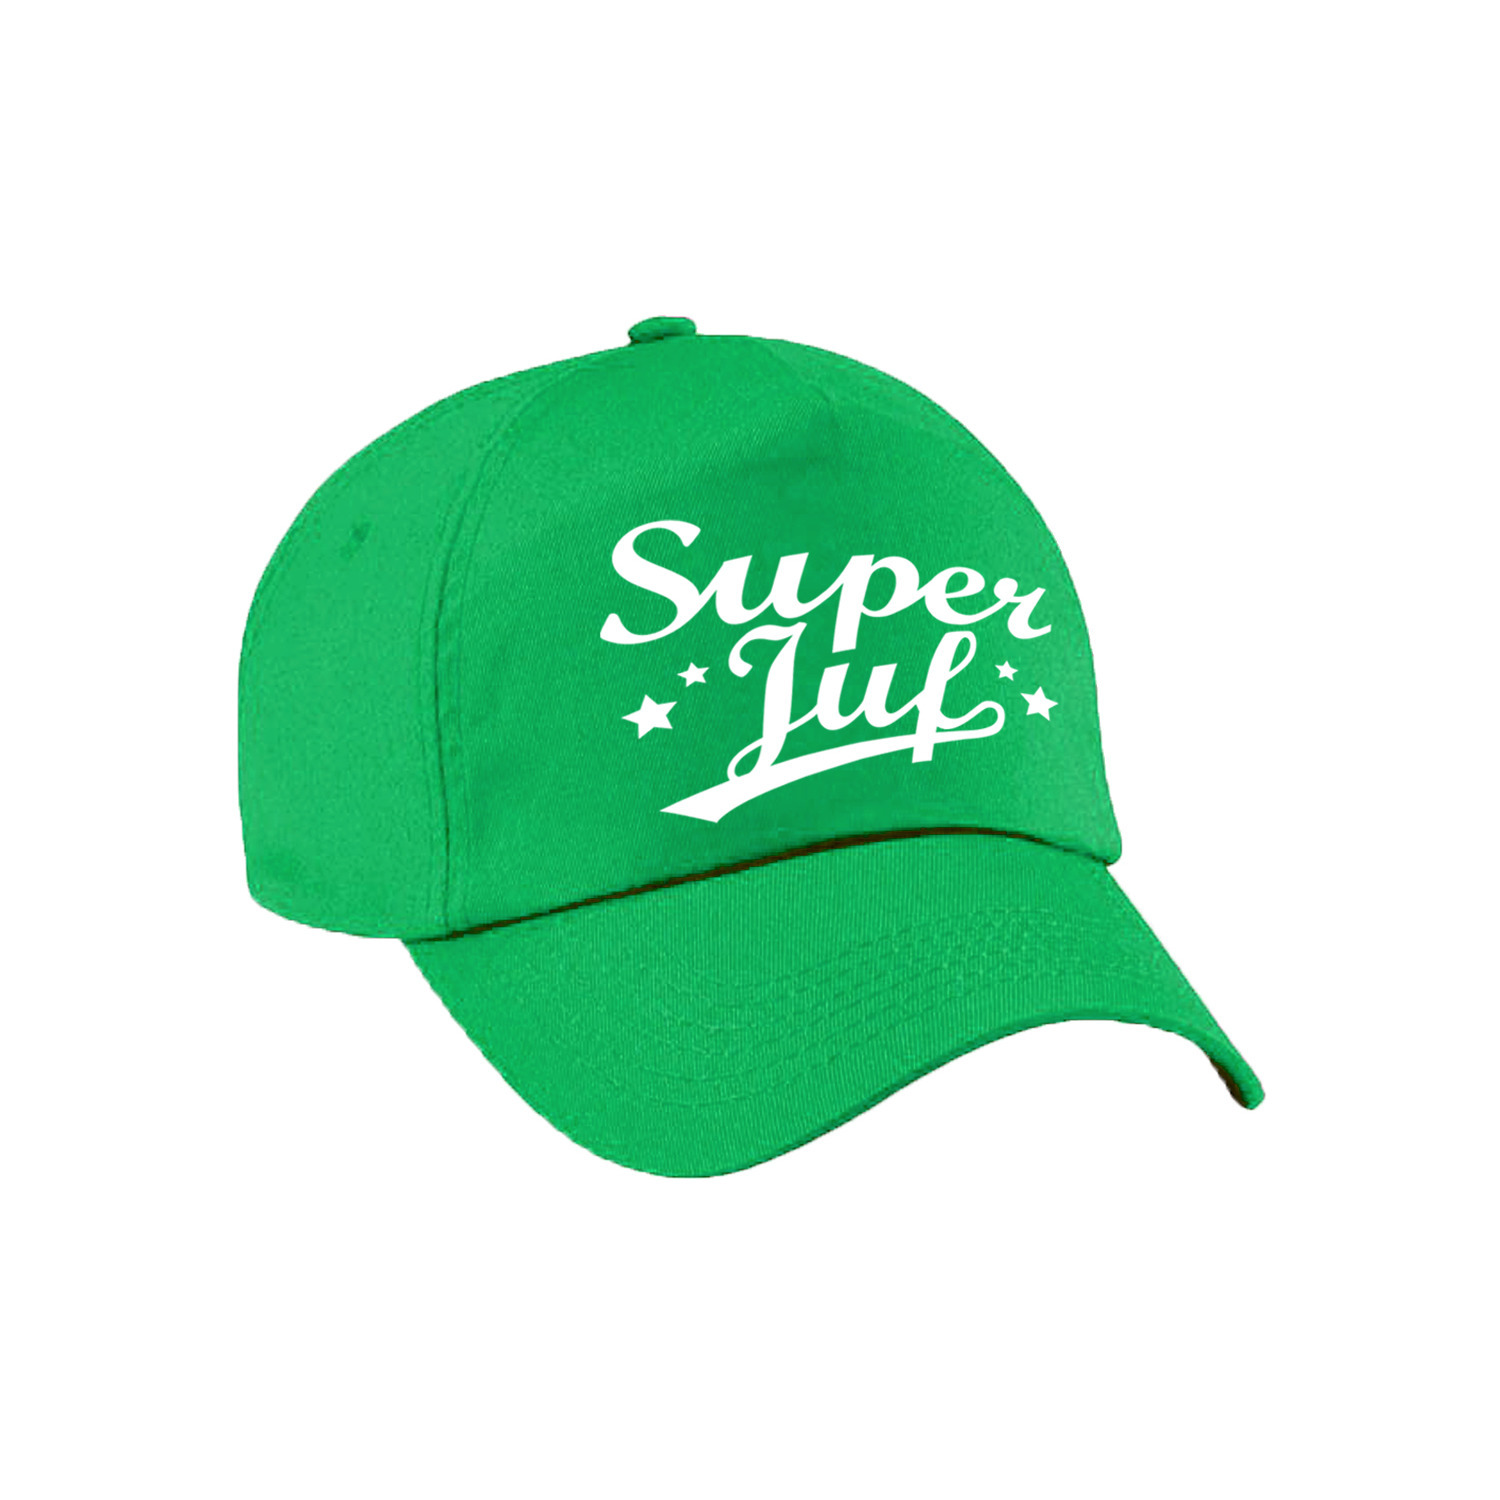 Super juf cadeau pet /cap groen voor dames